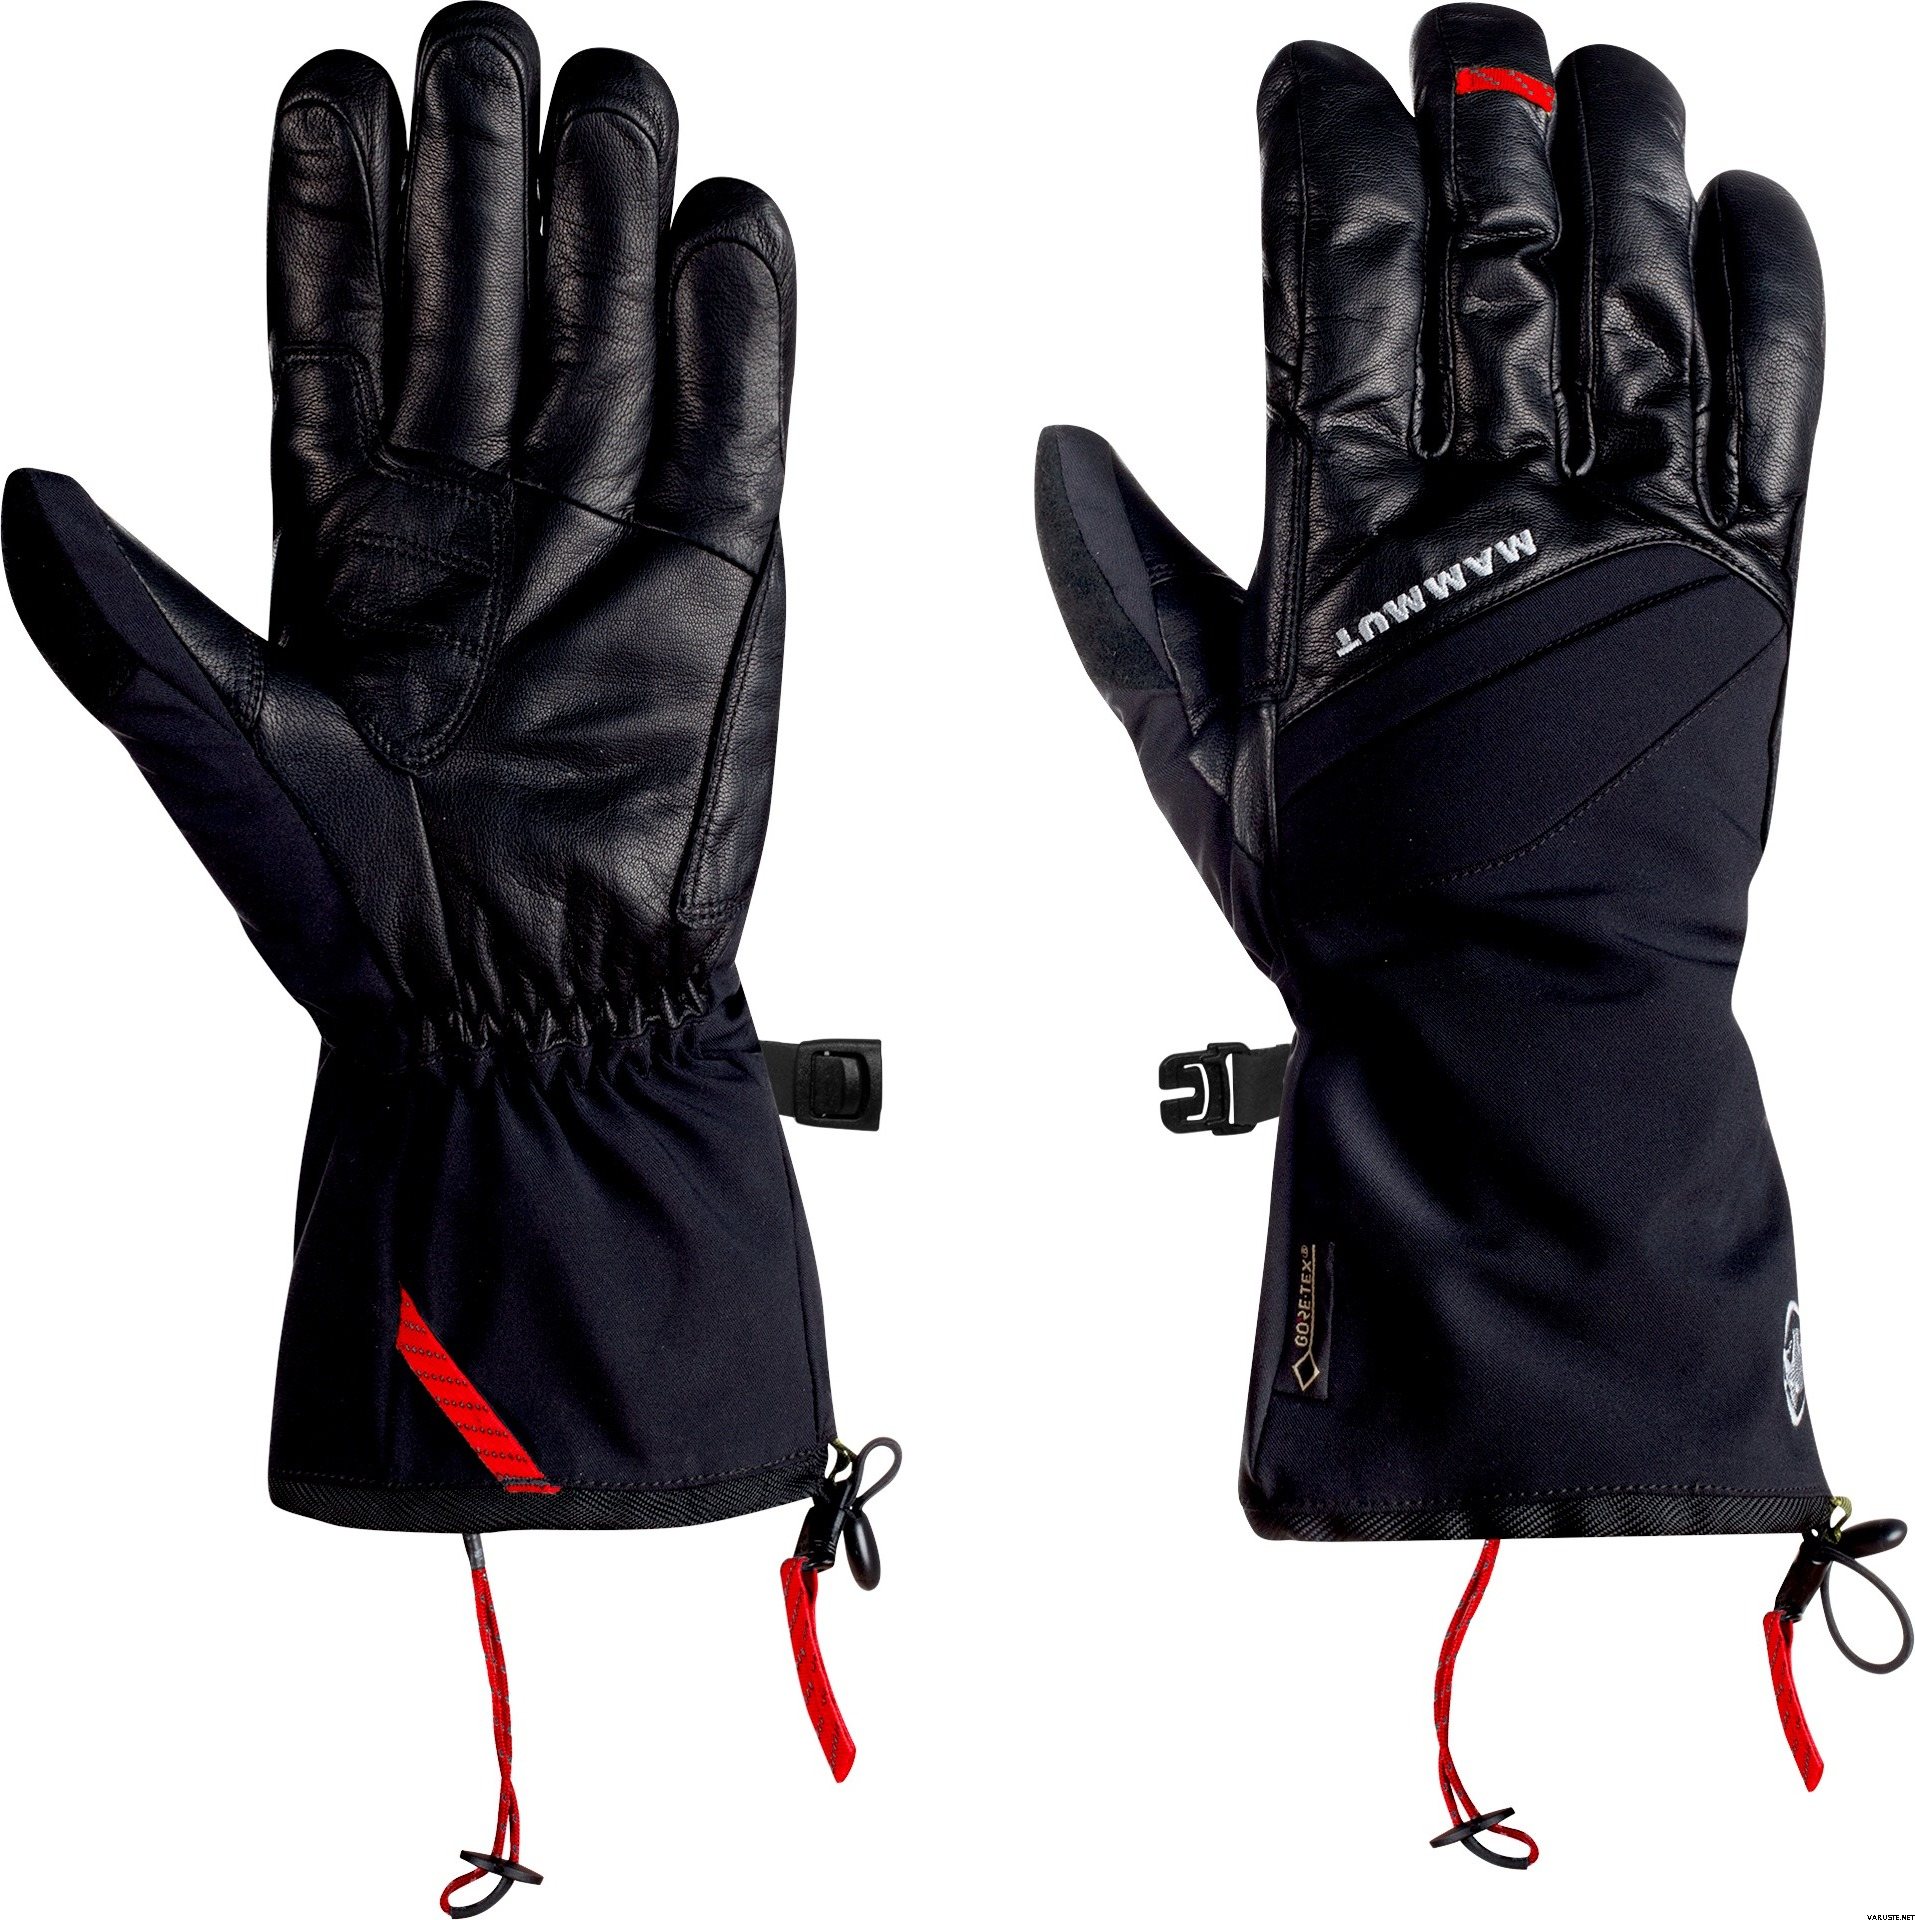 Mammut Meron Thermo 2 in 1 Glove | Downhill ski gloves | Varuste.net ...